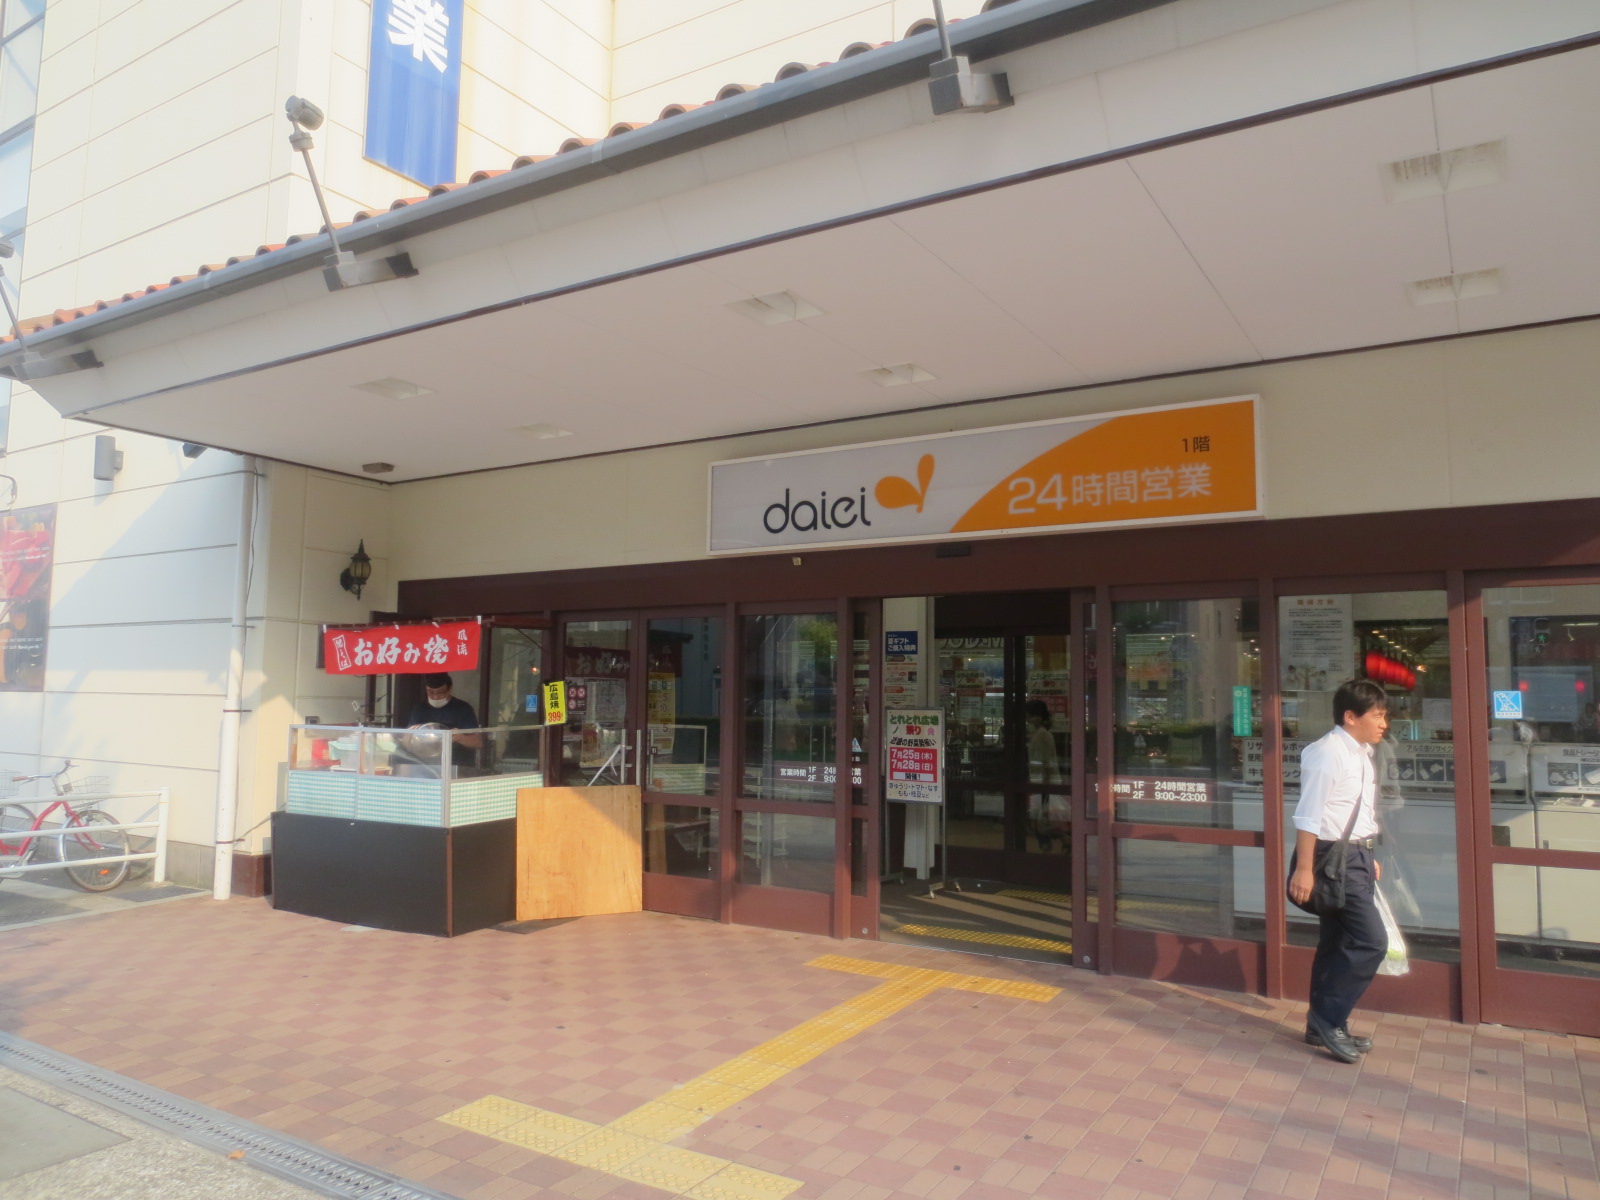 Supermarket. 307m to Daiei Konan store (Super)